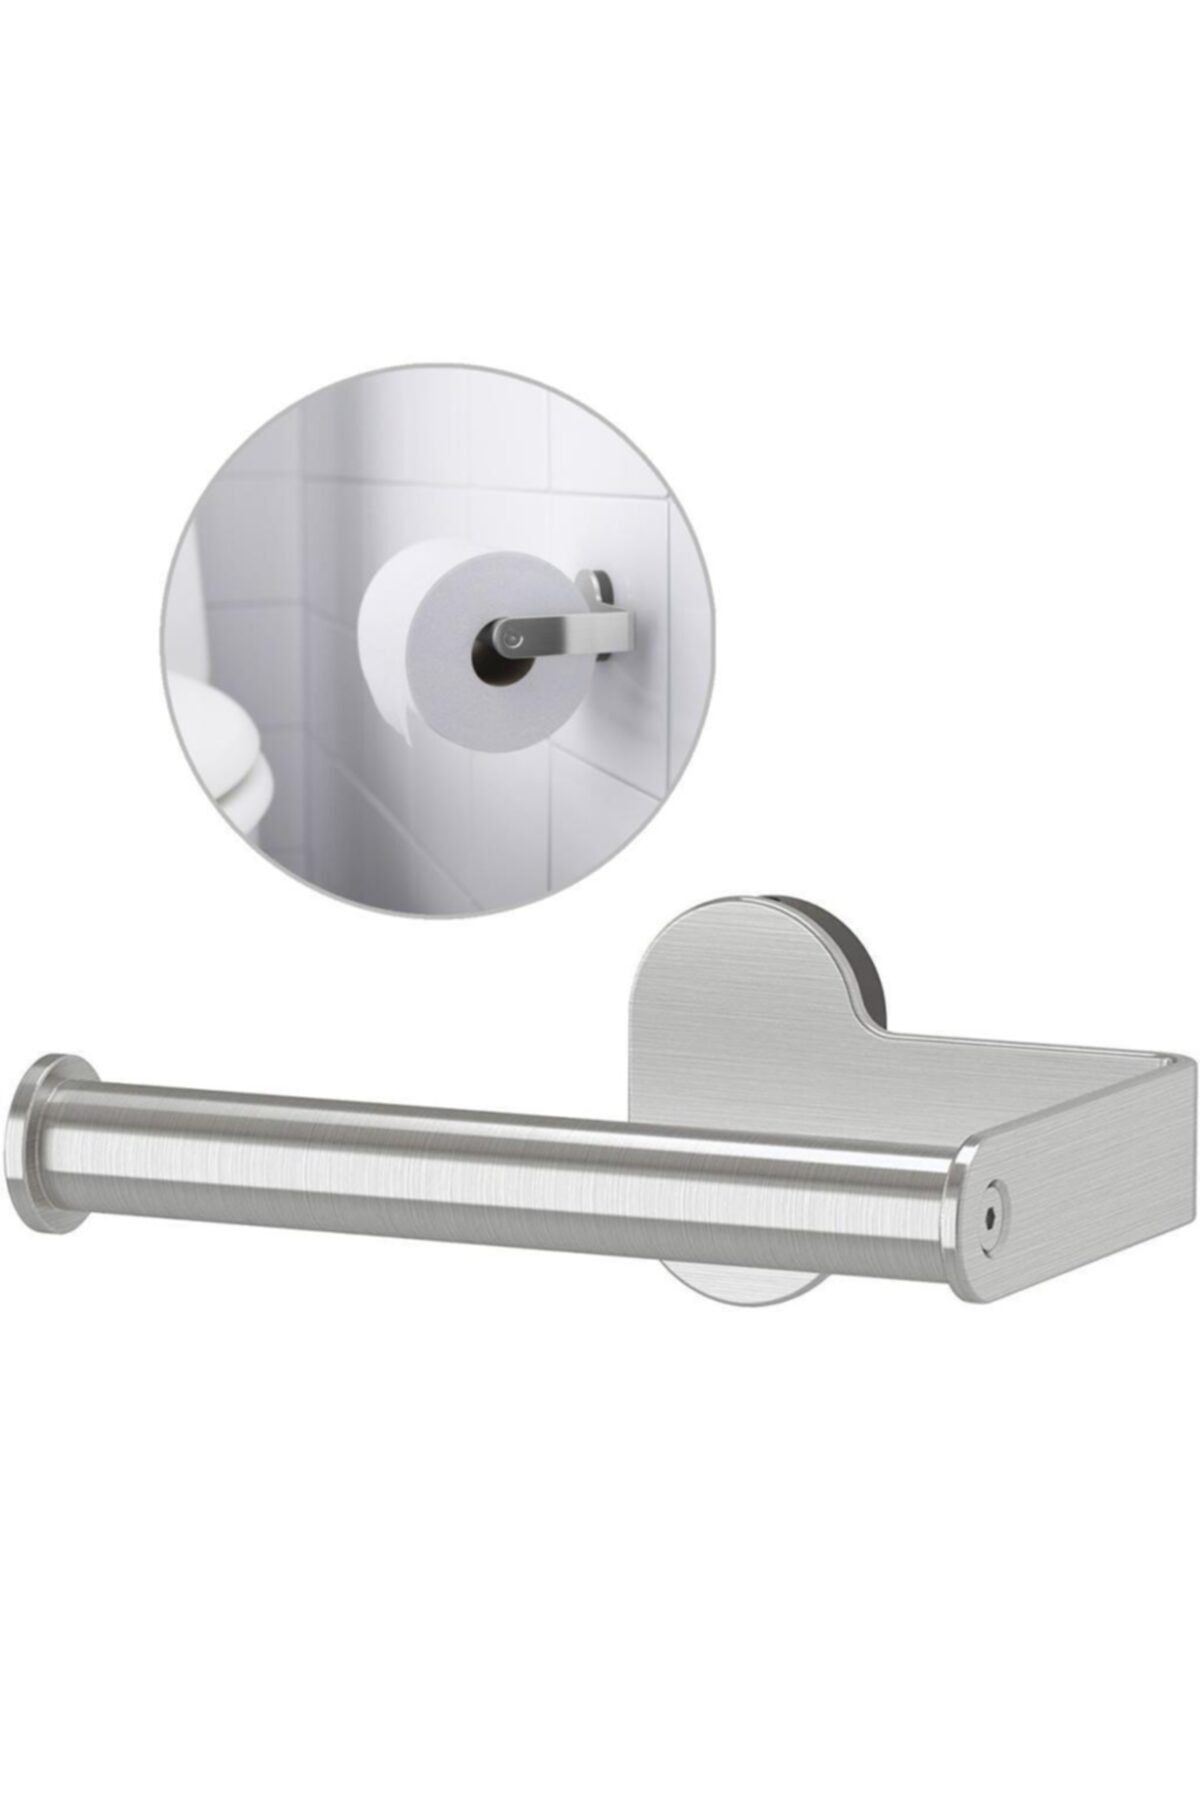 IKEA Metal Brogrund Wc Banyo Tuvalet Kağıtlığı Metal Beyaz